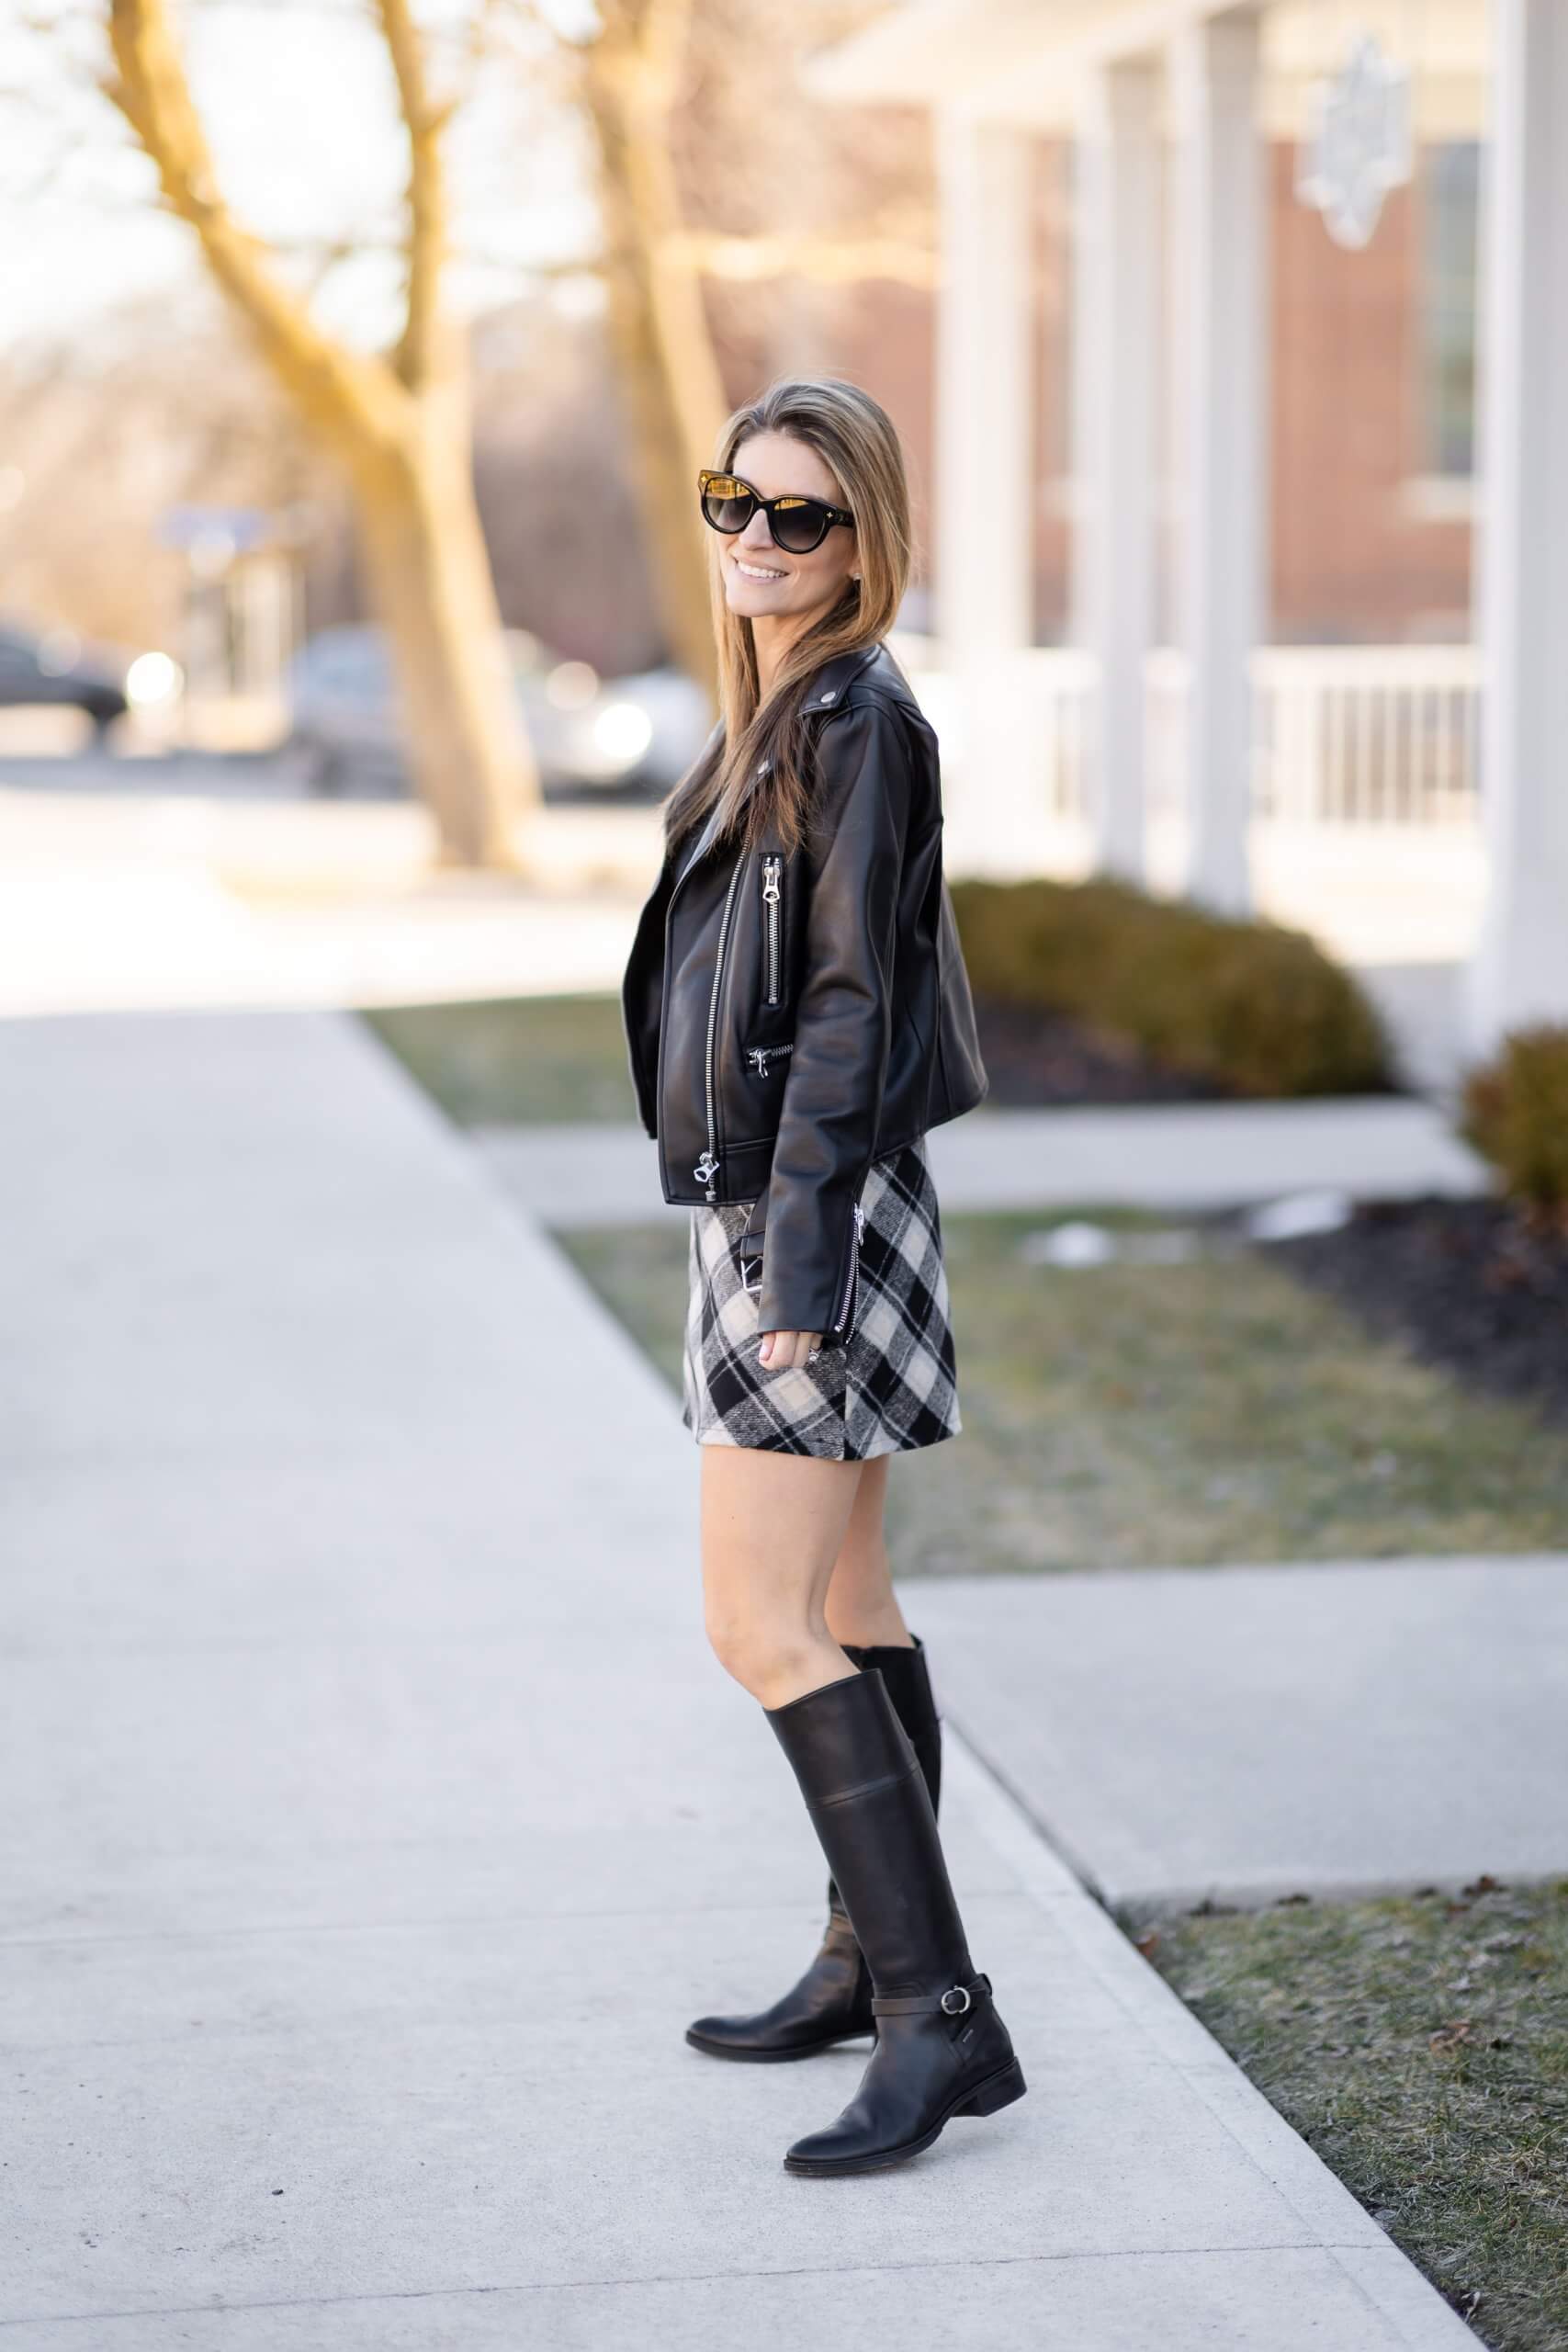 Plaid skirt winter style; chicwish plaid skirt; mandy furnis whitby blogger sparkleshinylove